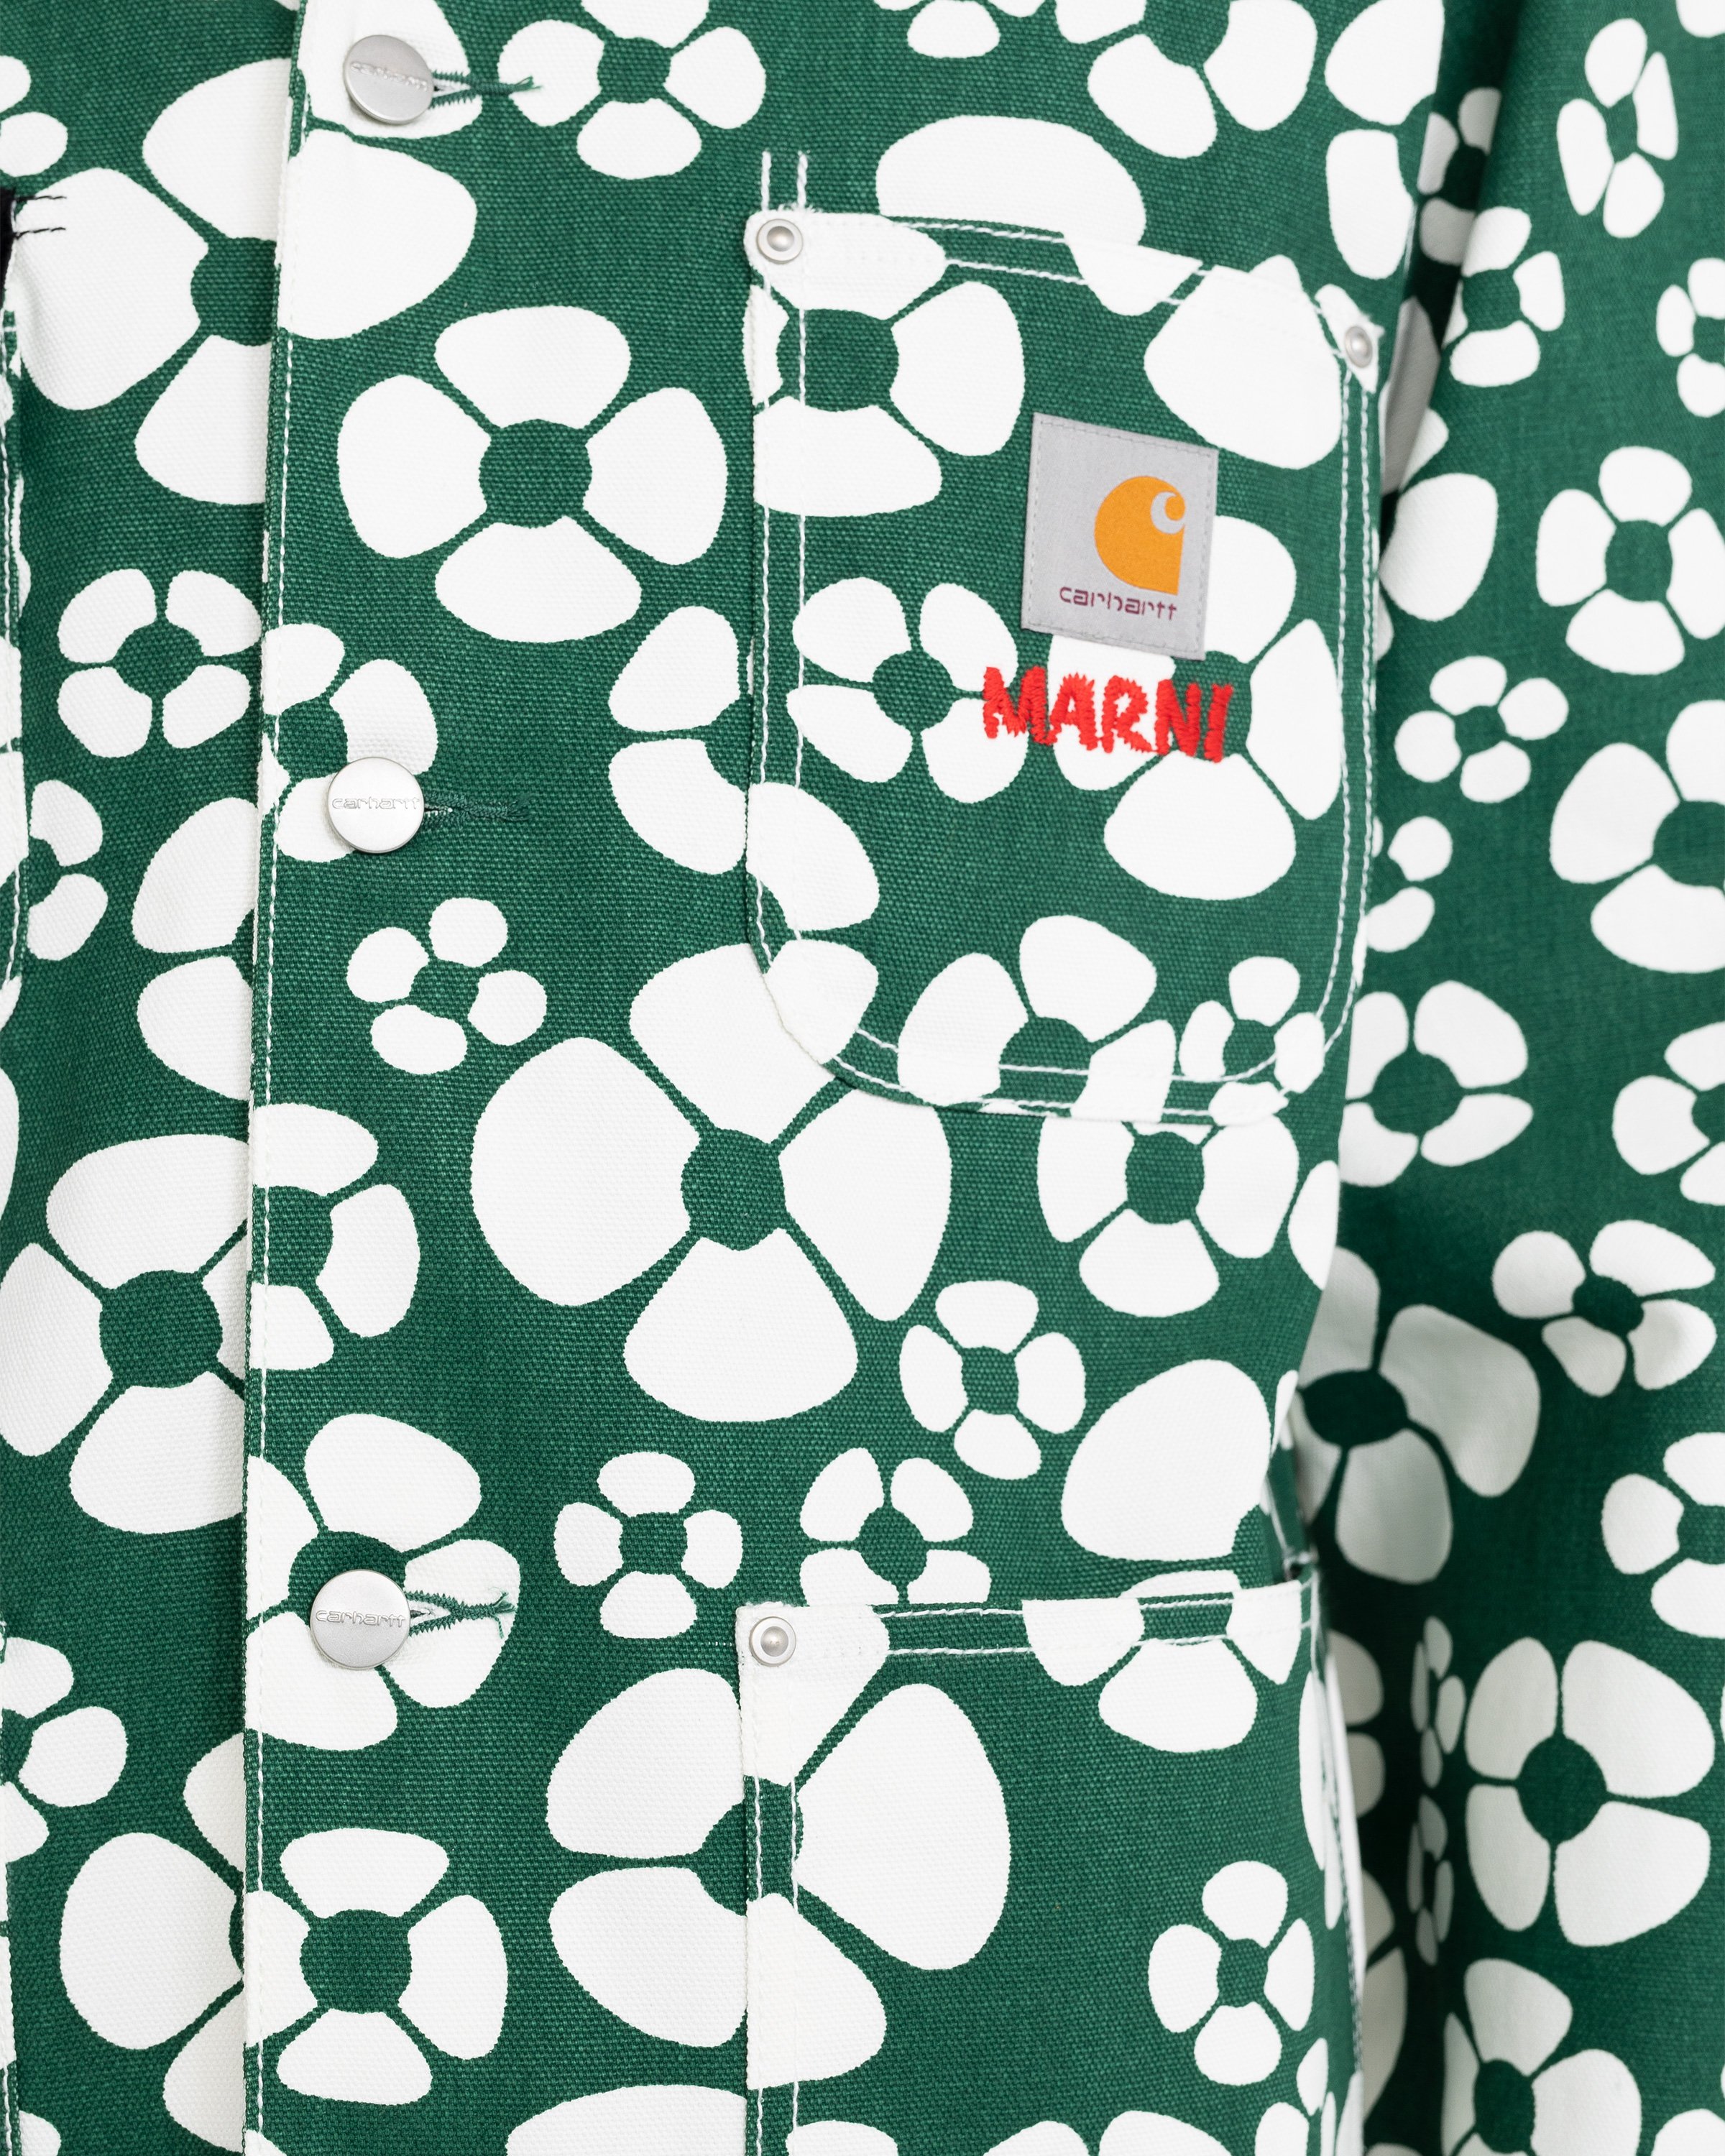 Marni x Carhartt WIP - Floral Jacket Green - Clothing - Green - Image 7